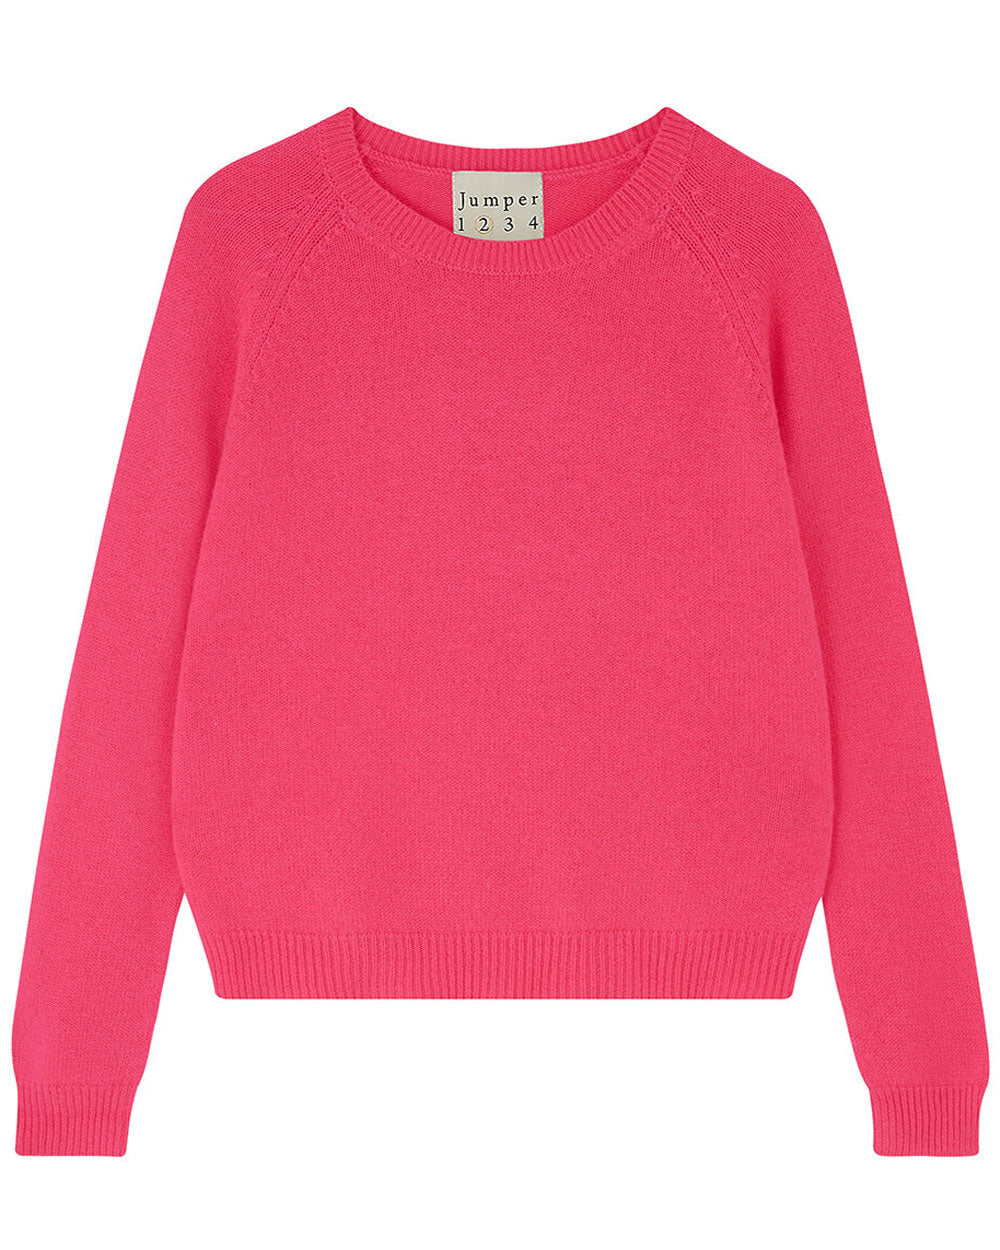 Jumper 1234 Neon Pink Cropped Crew Neck Sweater – Stanley Korshak